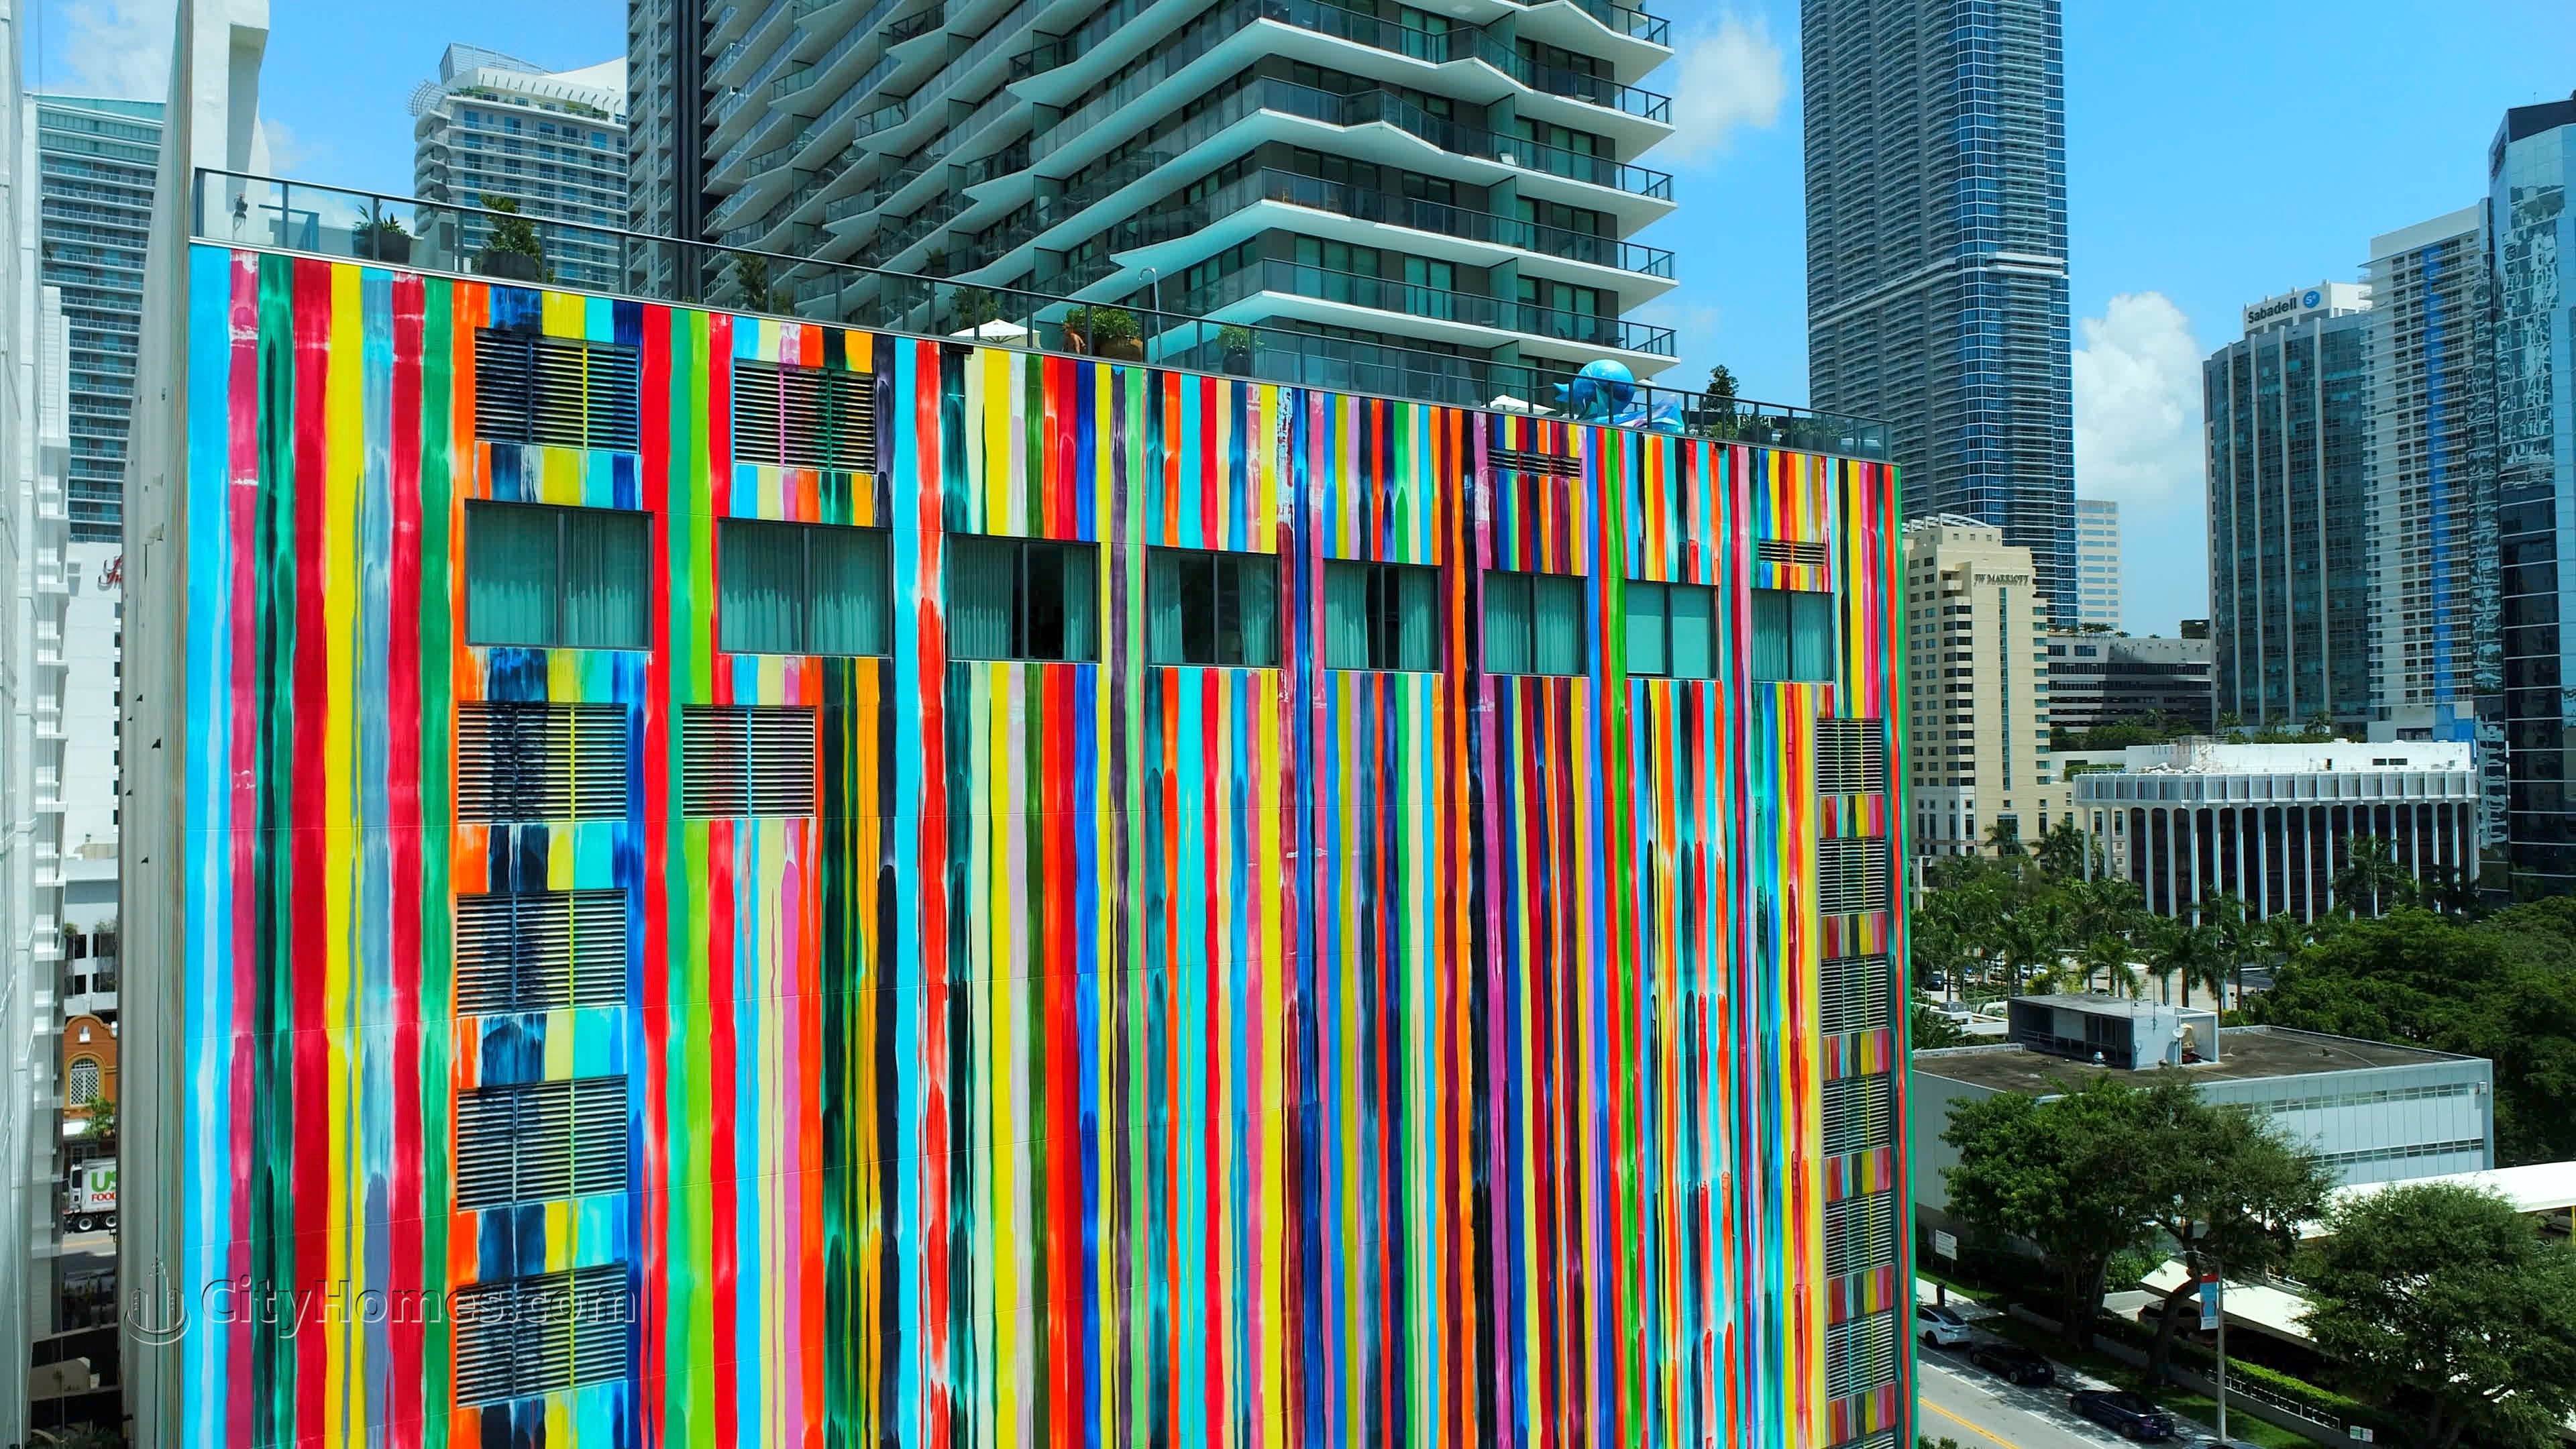 2. SLS Brickell gebouw op 1300 S Miami Ave, Brickell, Miami, FL 33130